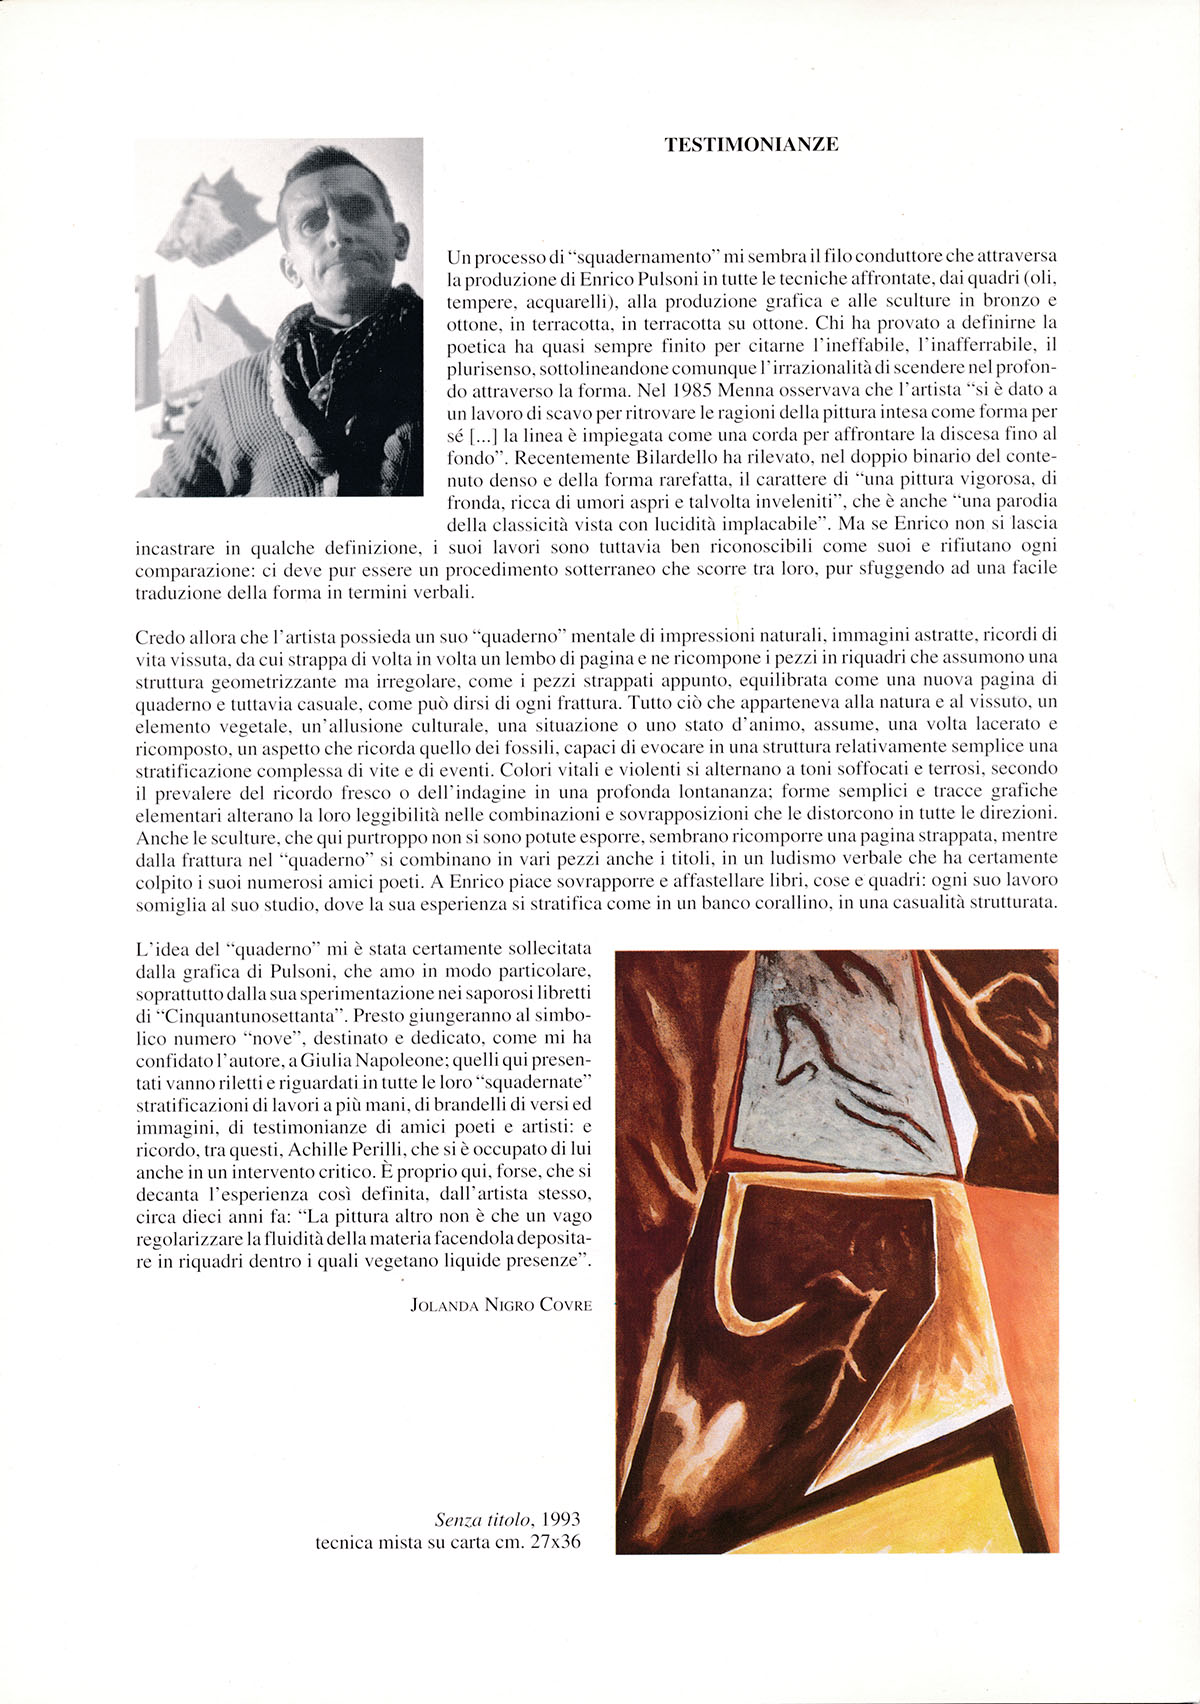 1997 Pescara Università degli studi testo di J.Nigro Covre